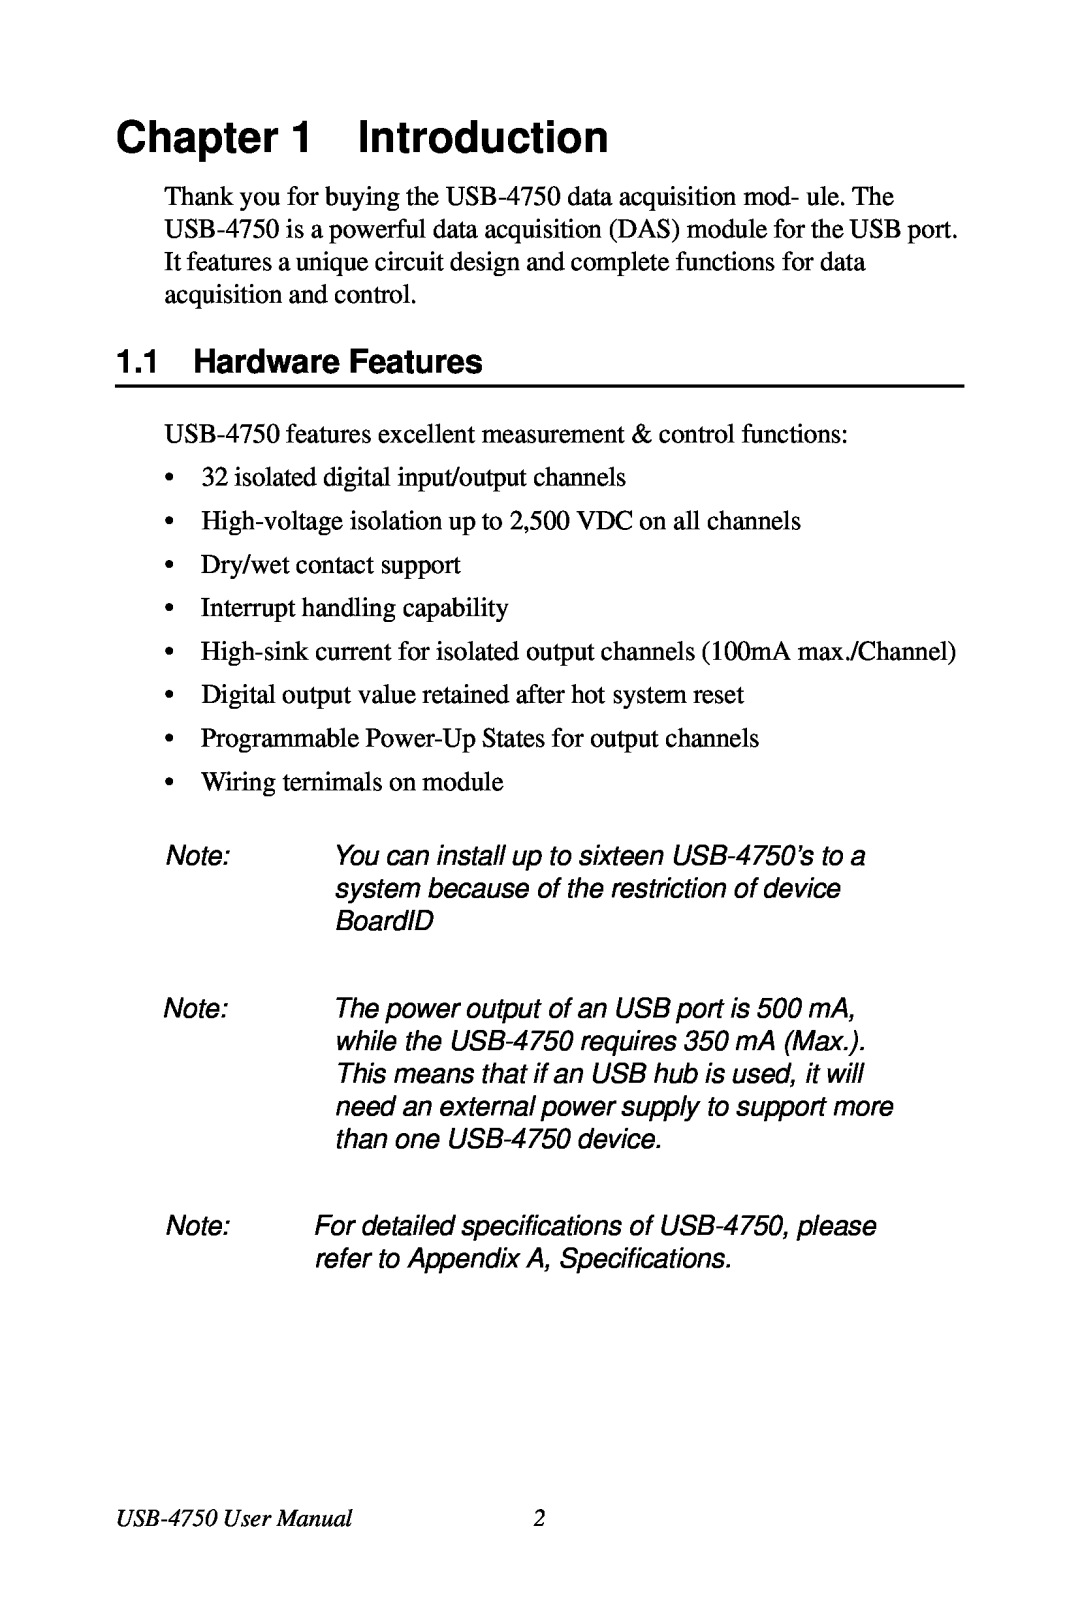 Omega USB-4750 manual Introduction, Hardware Features 